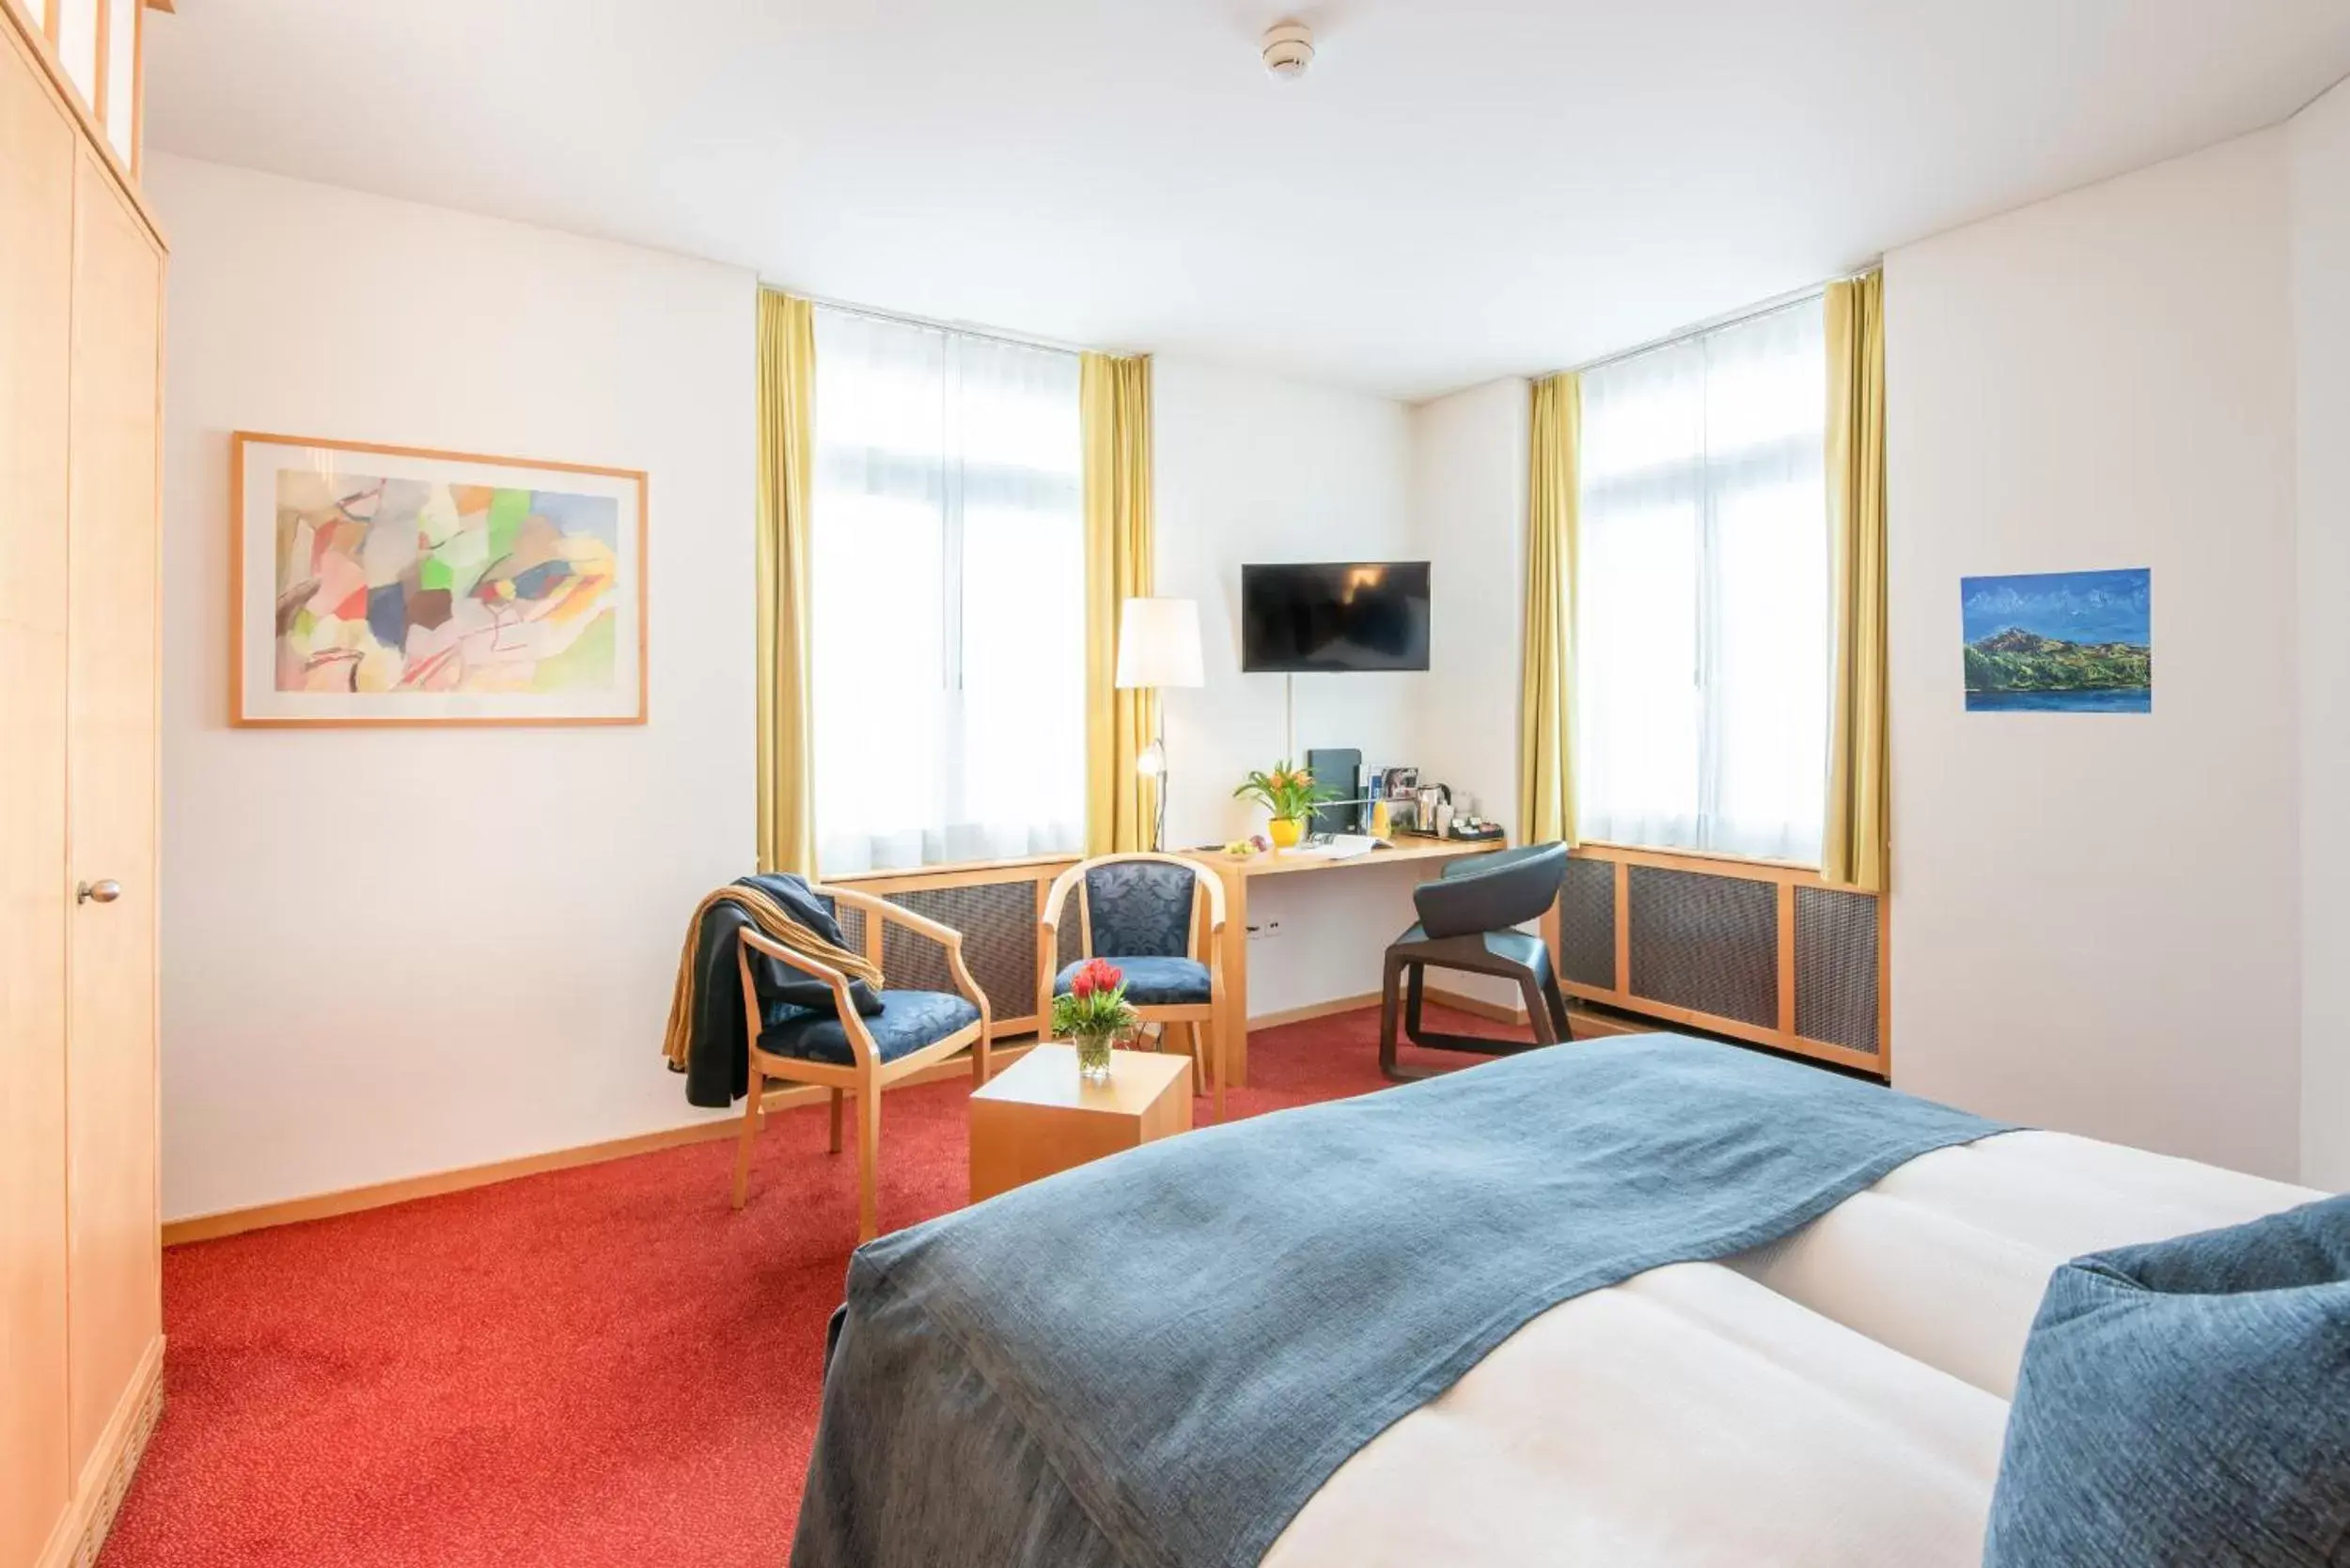 Photo of the whole room in Hotel Schweizerhof St. Moritz